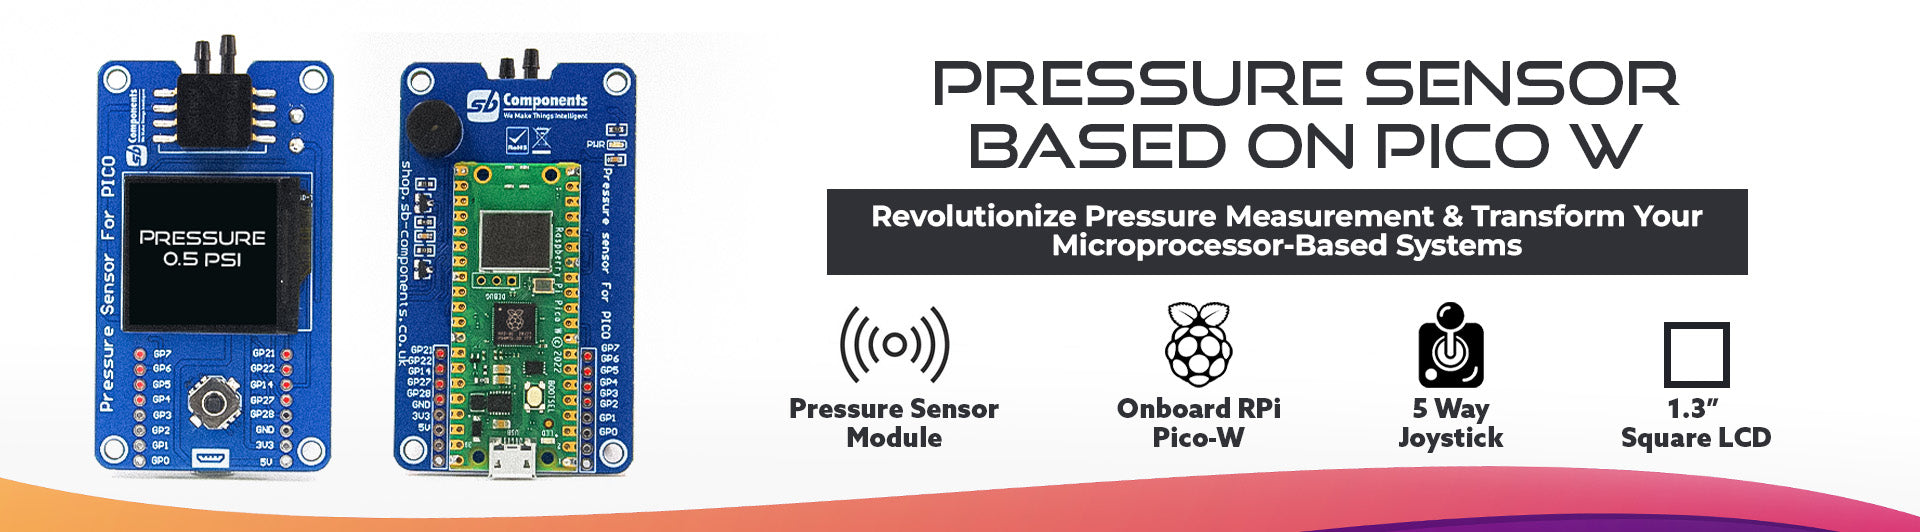 Pressure Sensor Based on Pico W